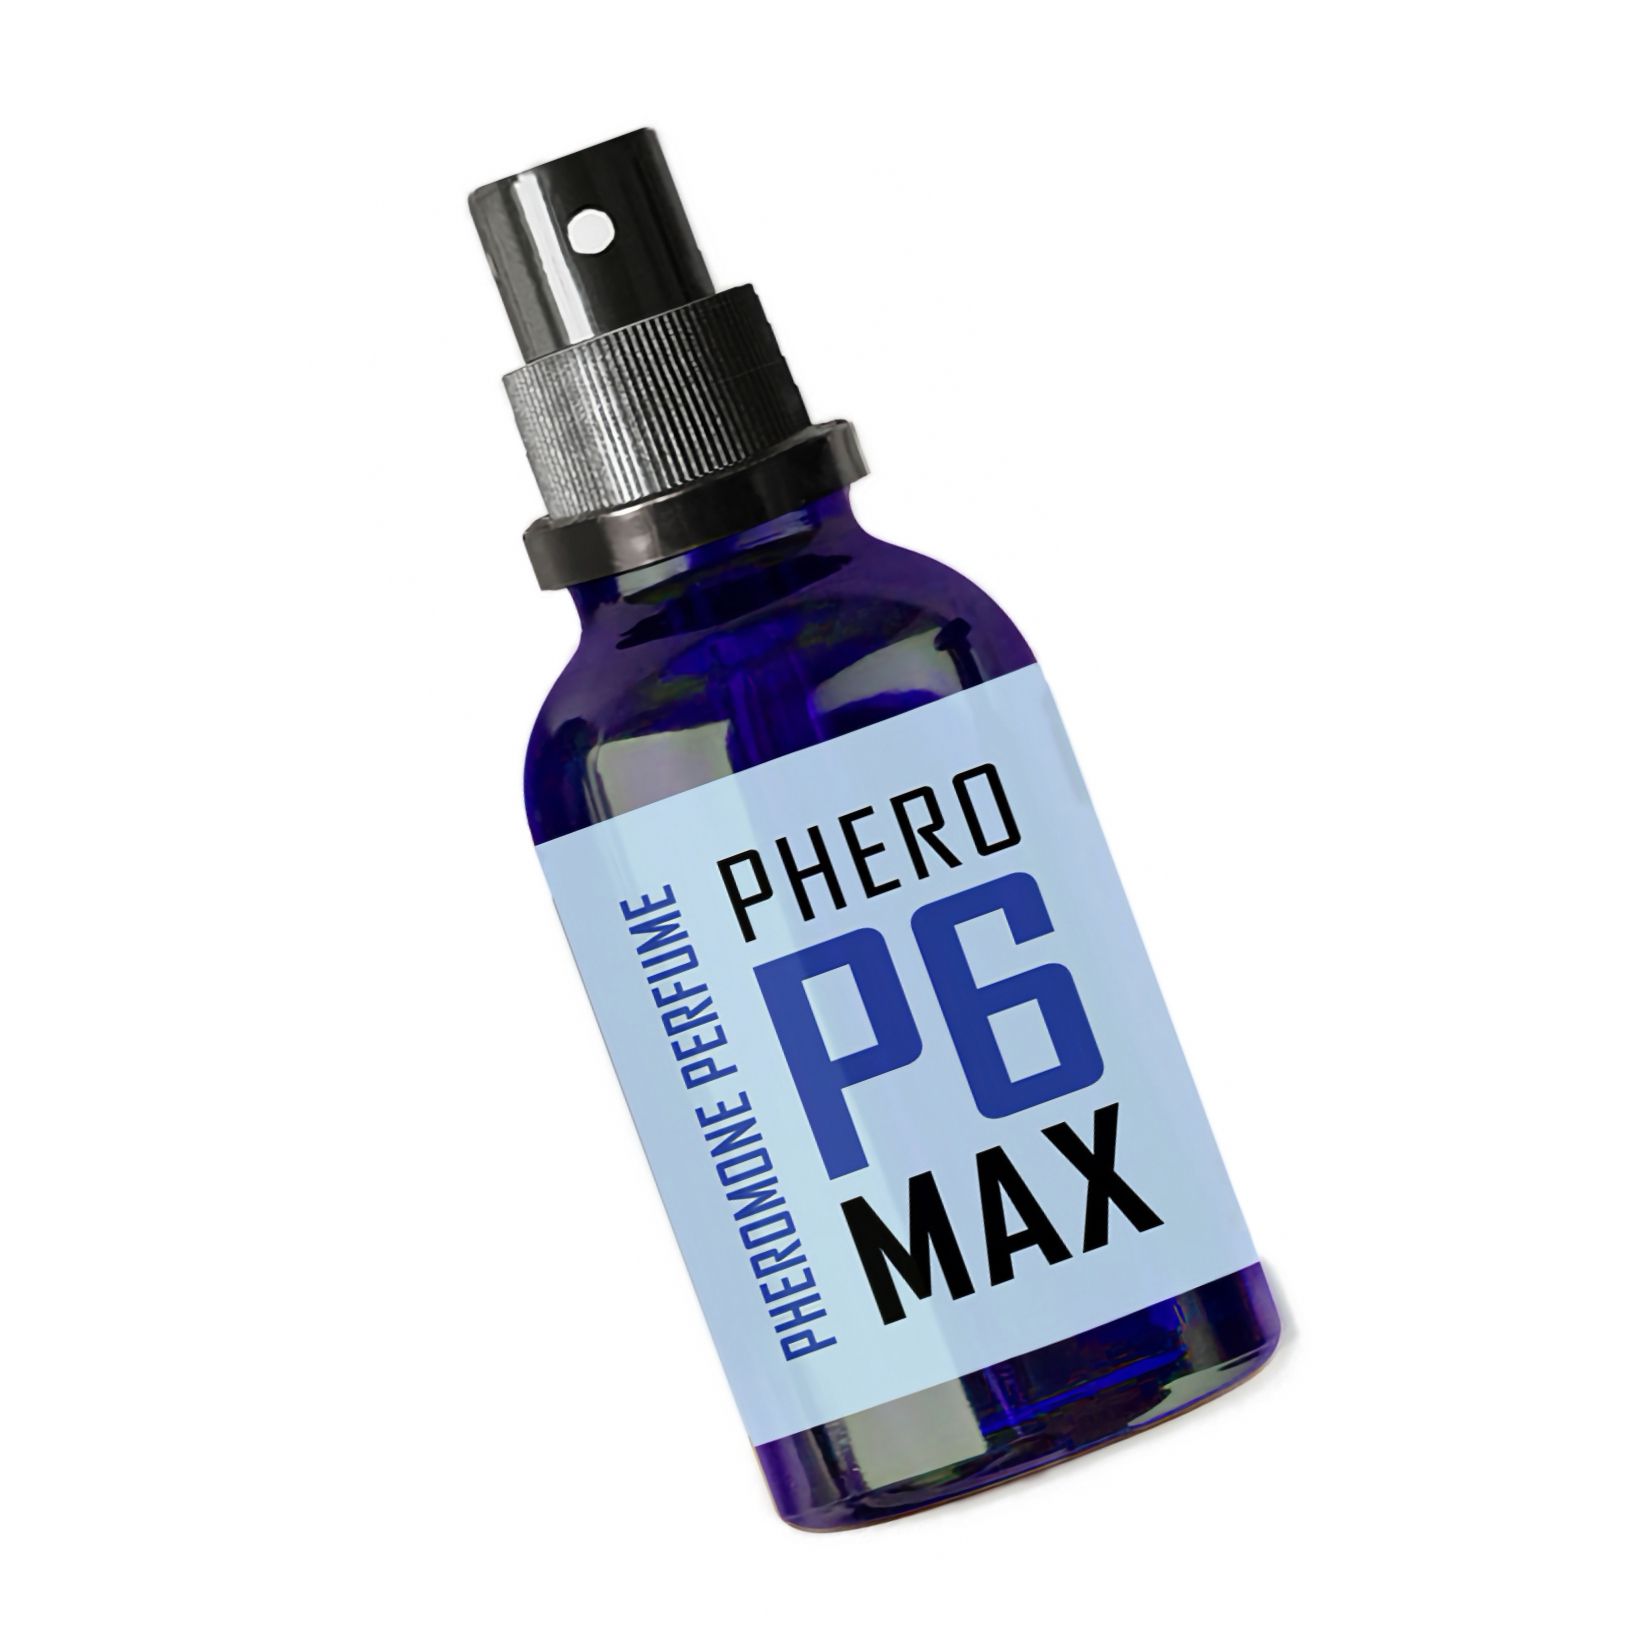 Phero P6 Max